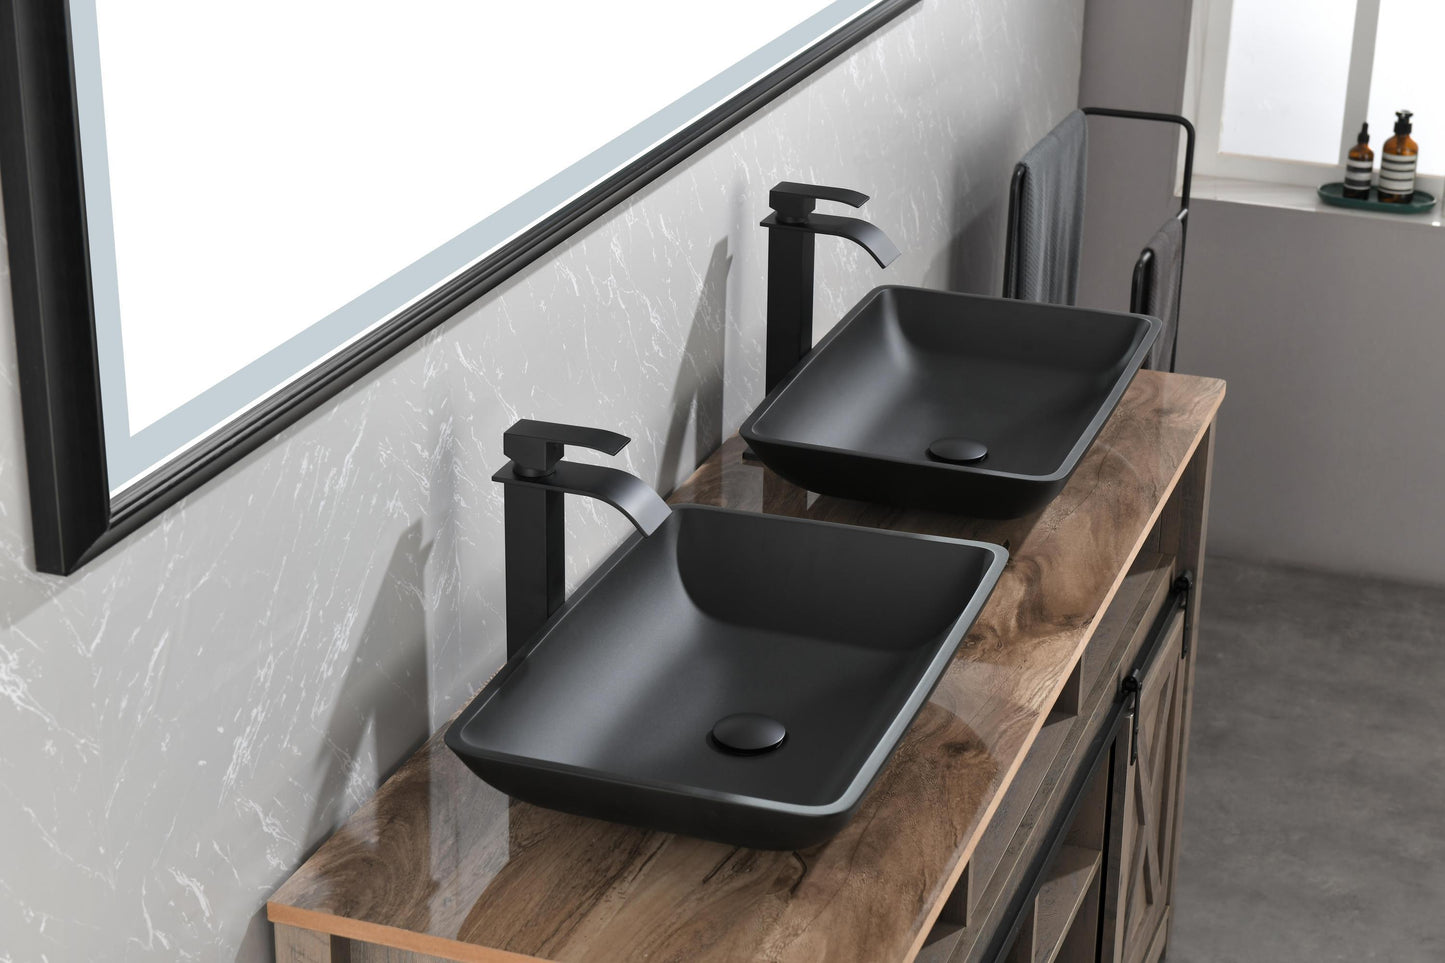 Matte Black Glass Rectangular Vessel Bathroom Sink Set with Faucet and Pop-Up Drain